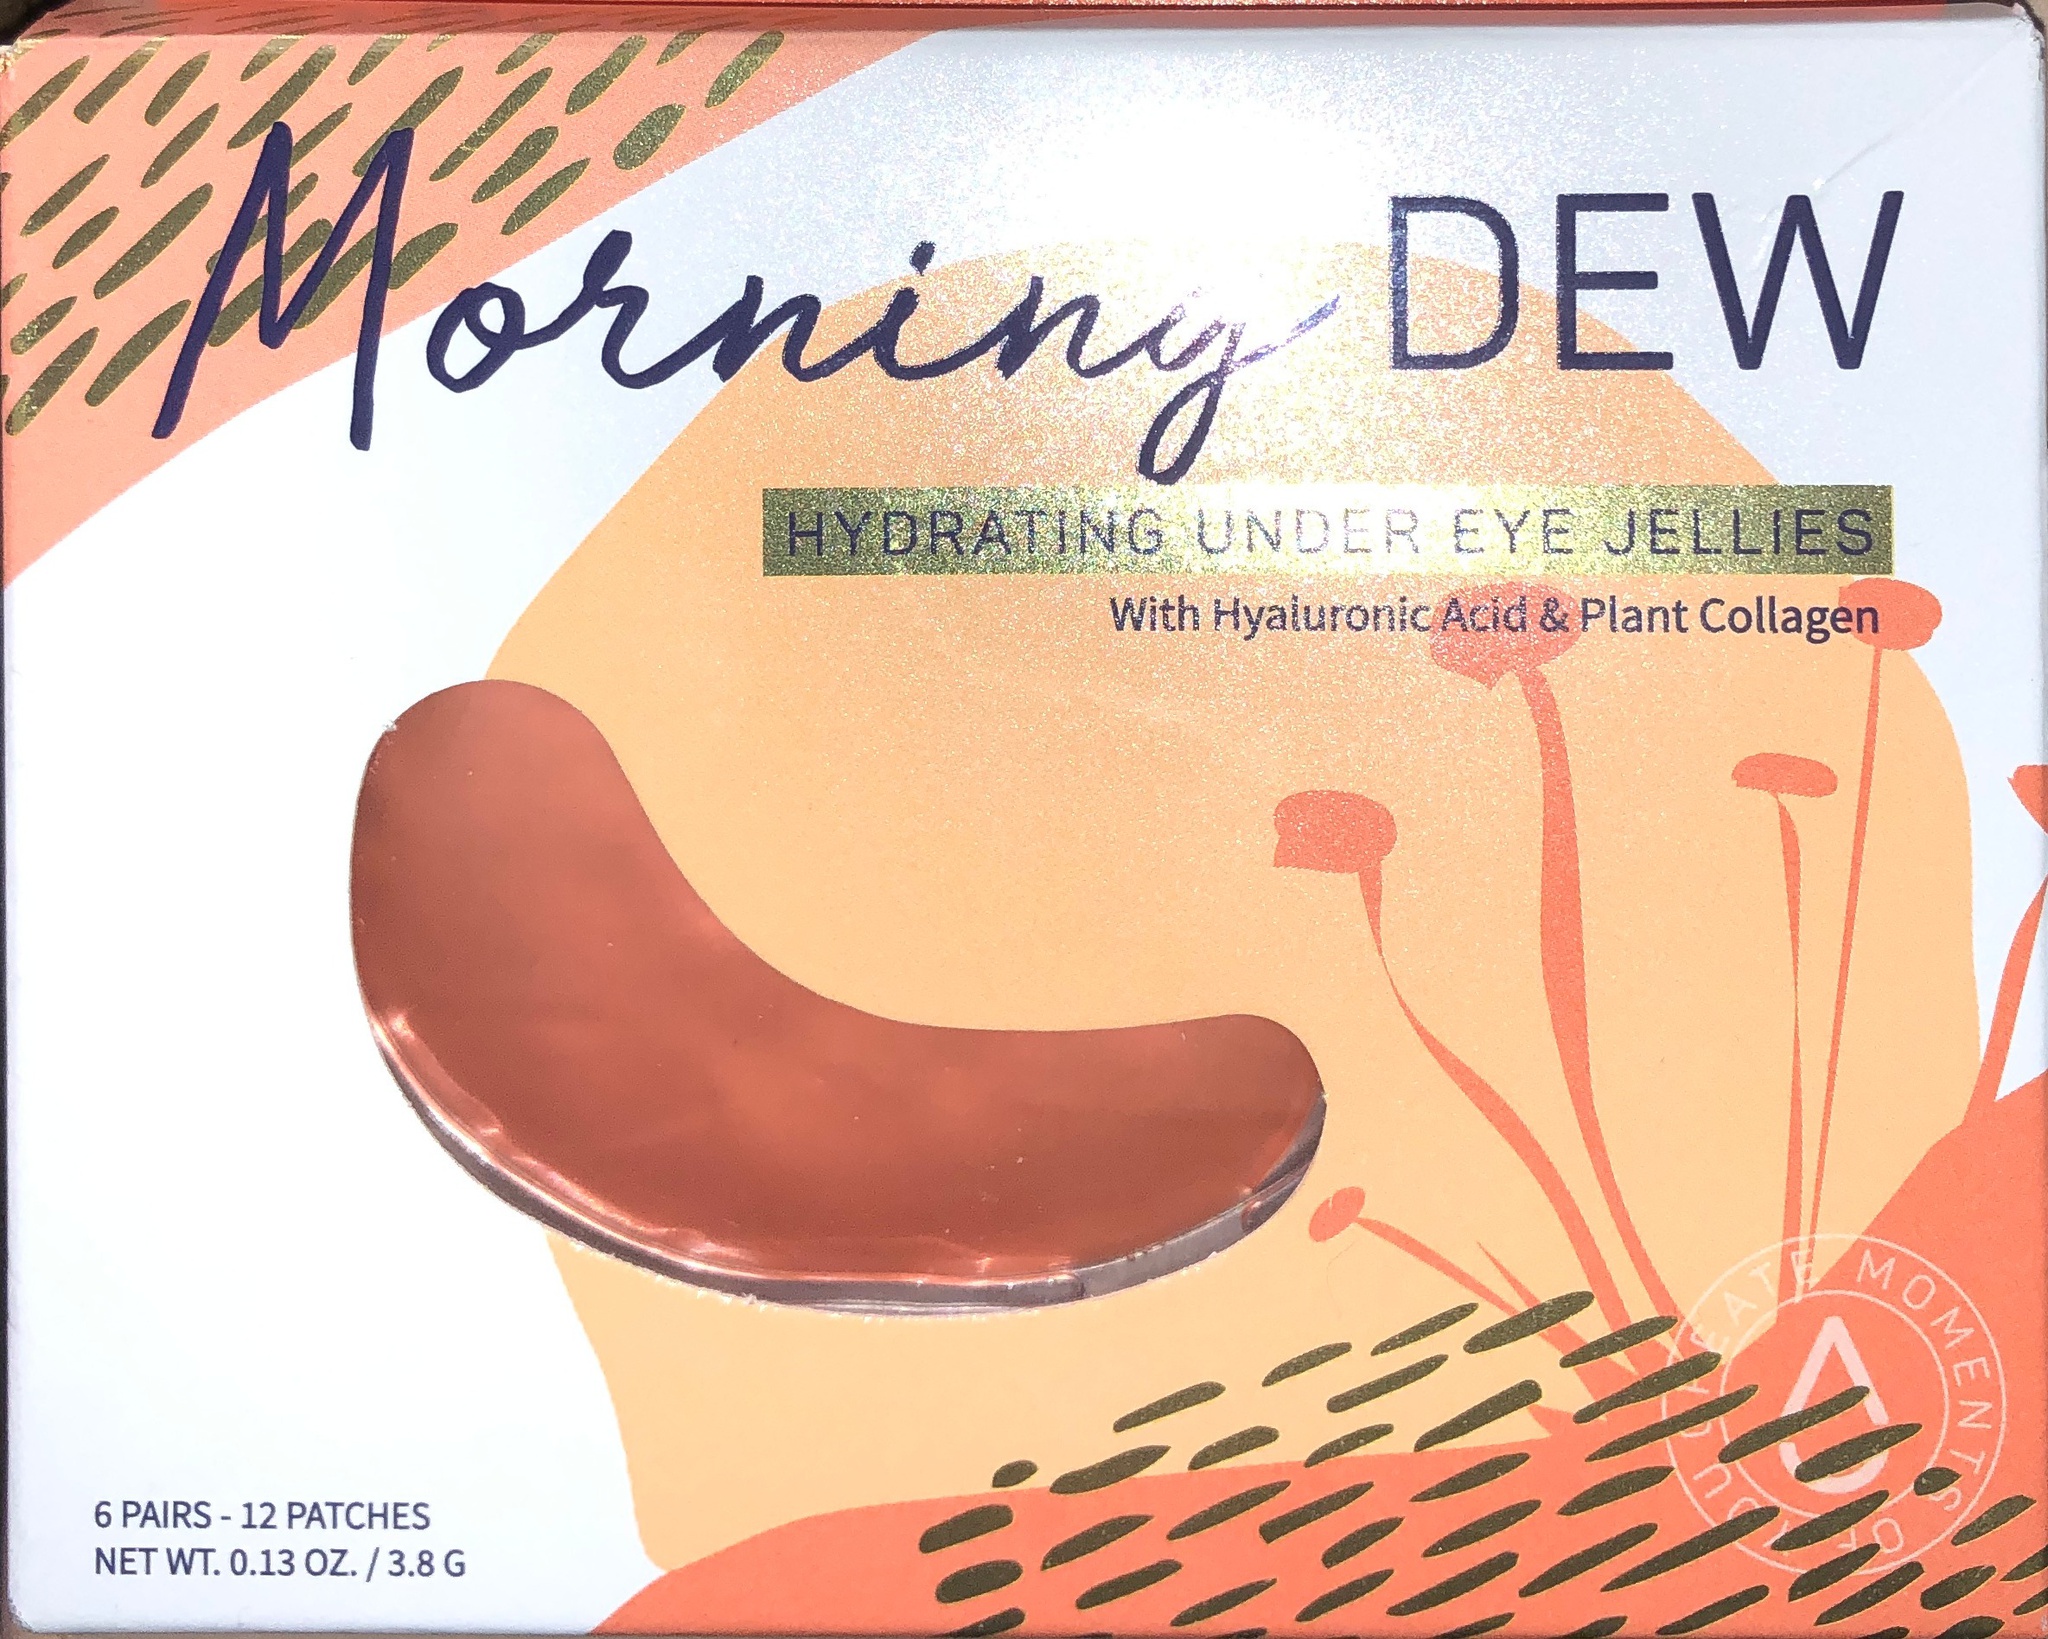 Spa life Morning Dew Hydrating Under Eye Jellies